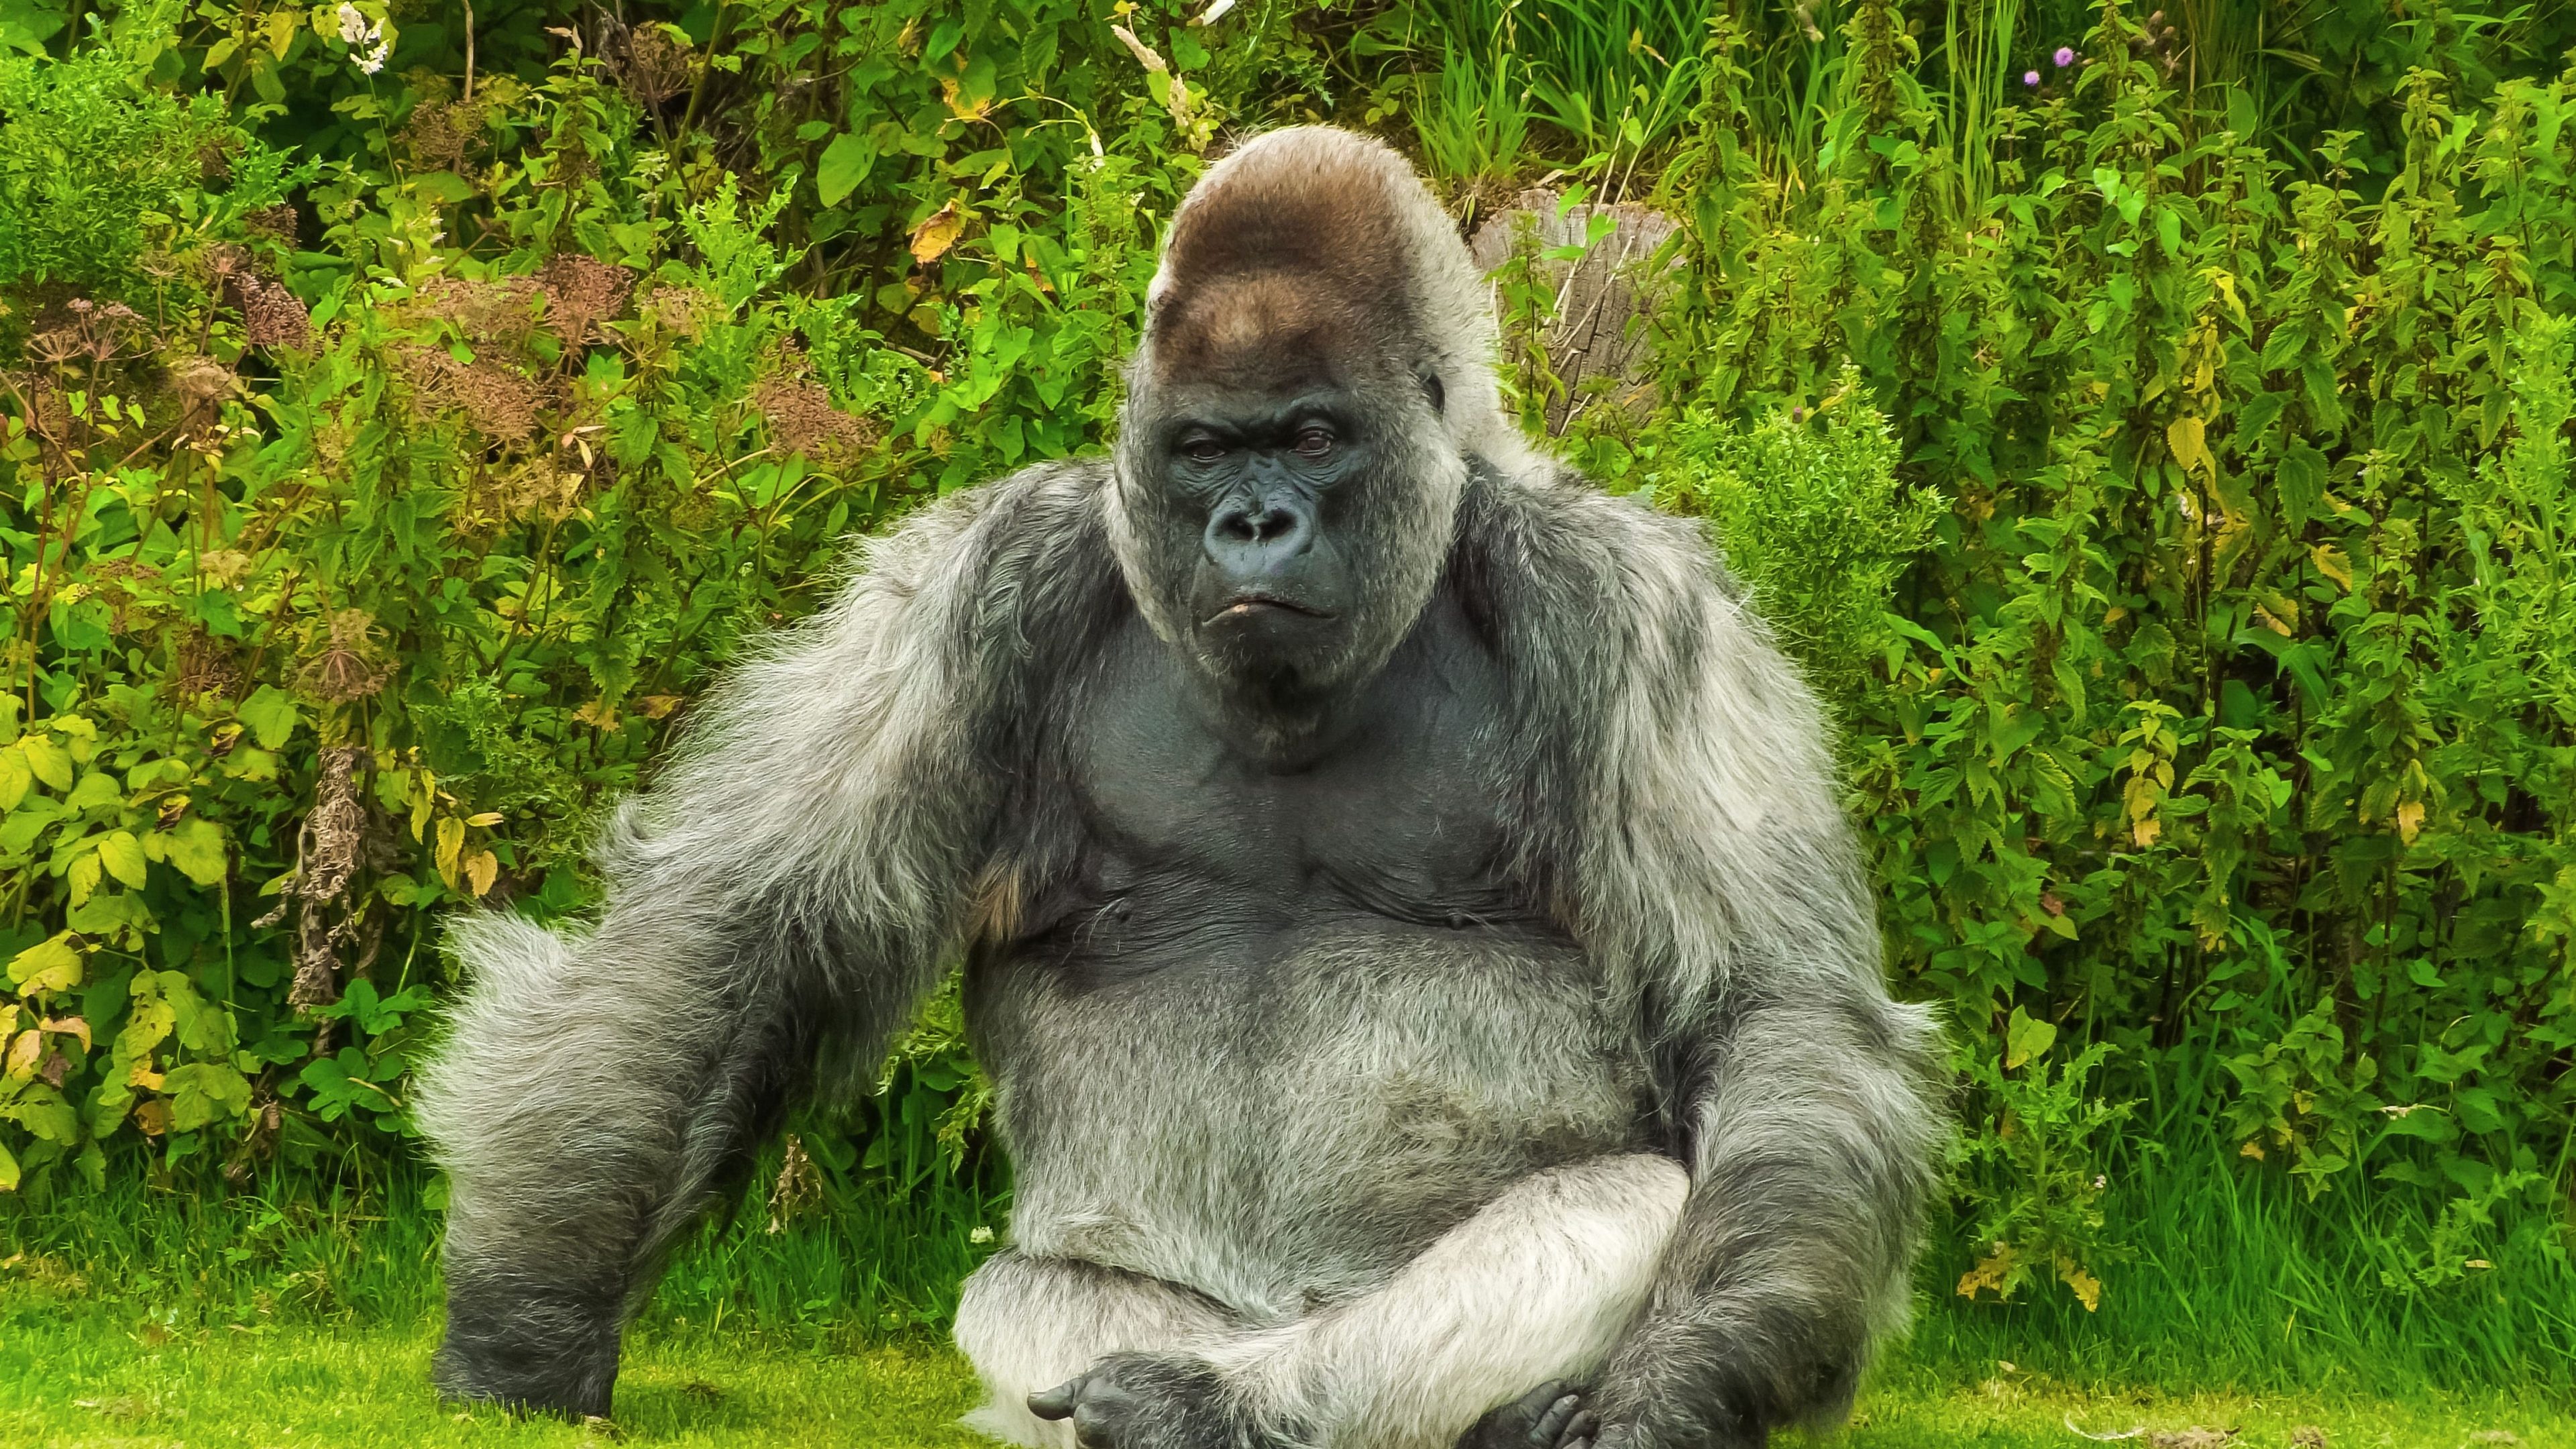 Silverback gorilla, Stunning 4K wallpaper, Powerful primate, Wildlife beauty, 3840x2160 4K Desktop